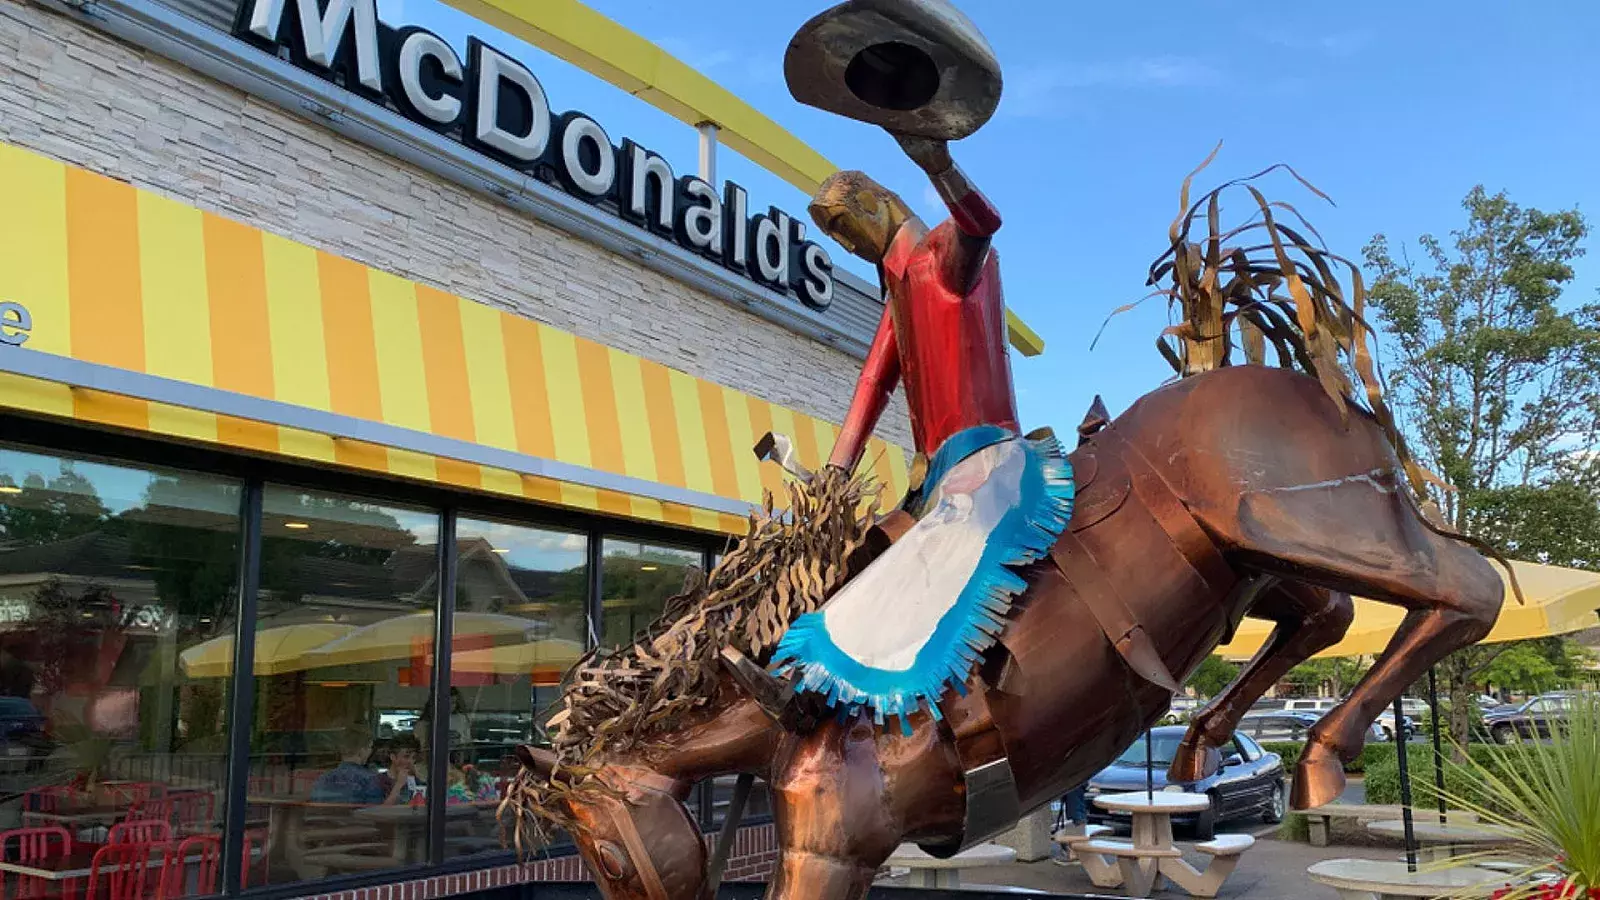 Joven cubano se hace viral por ir en caballo a McDonald’s de Hialeah